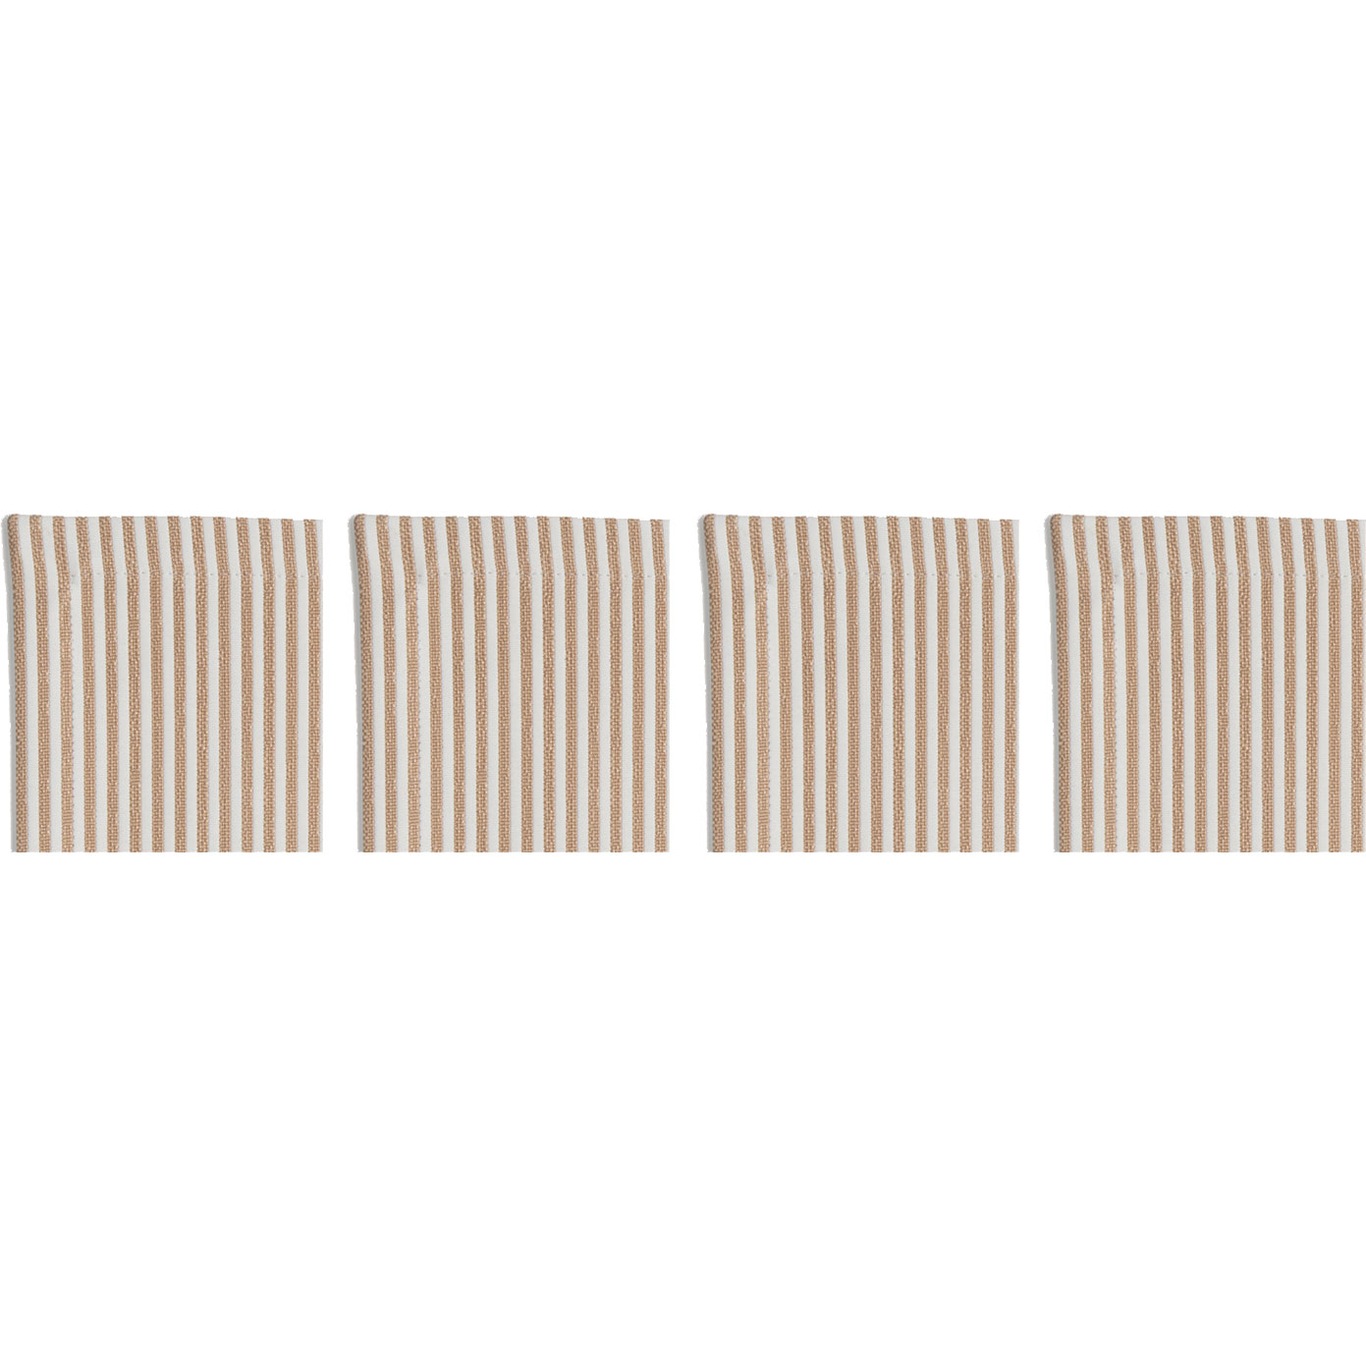 Narrow Stripe Glasunderlägg 10x10 cm 4-pack, Beige